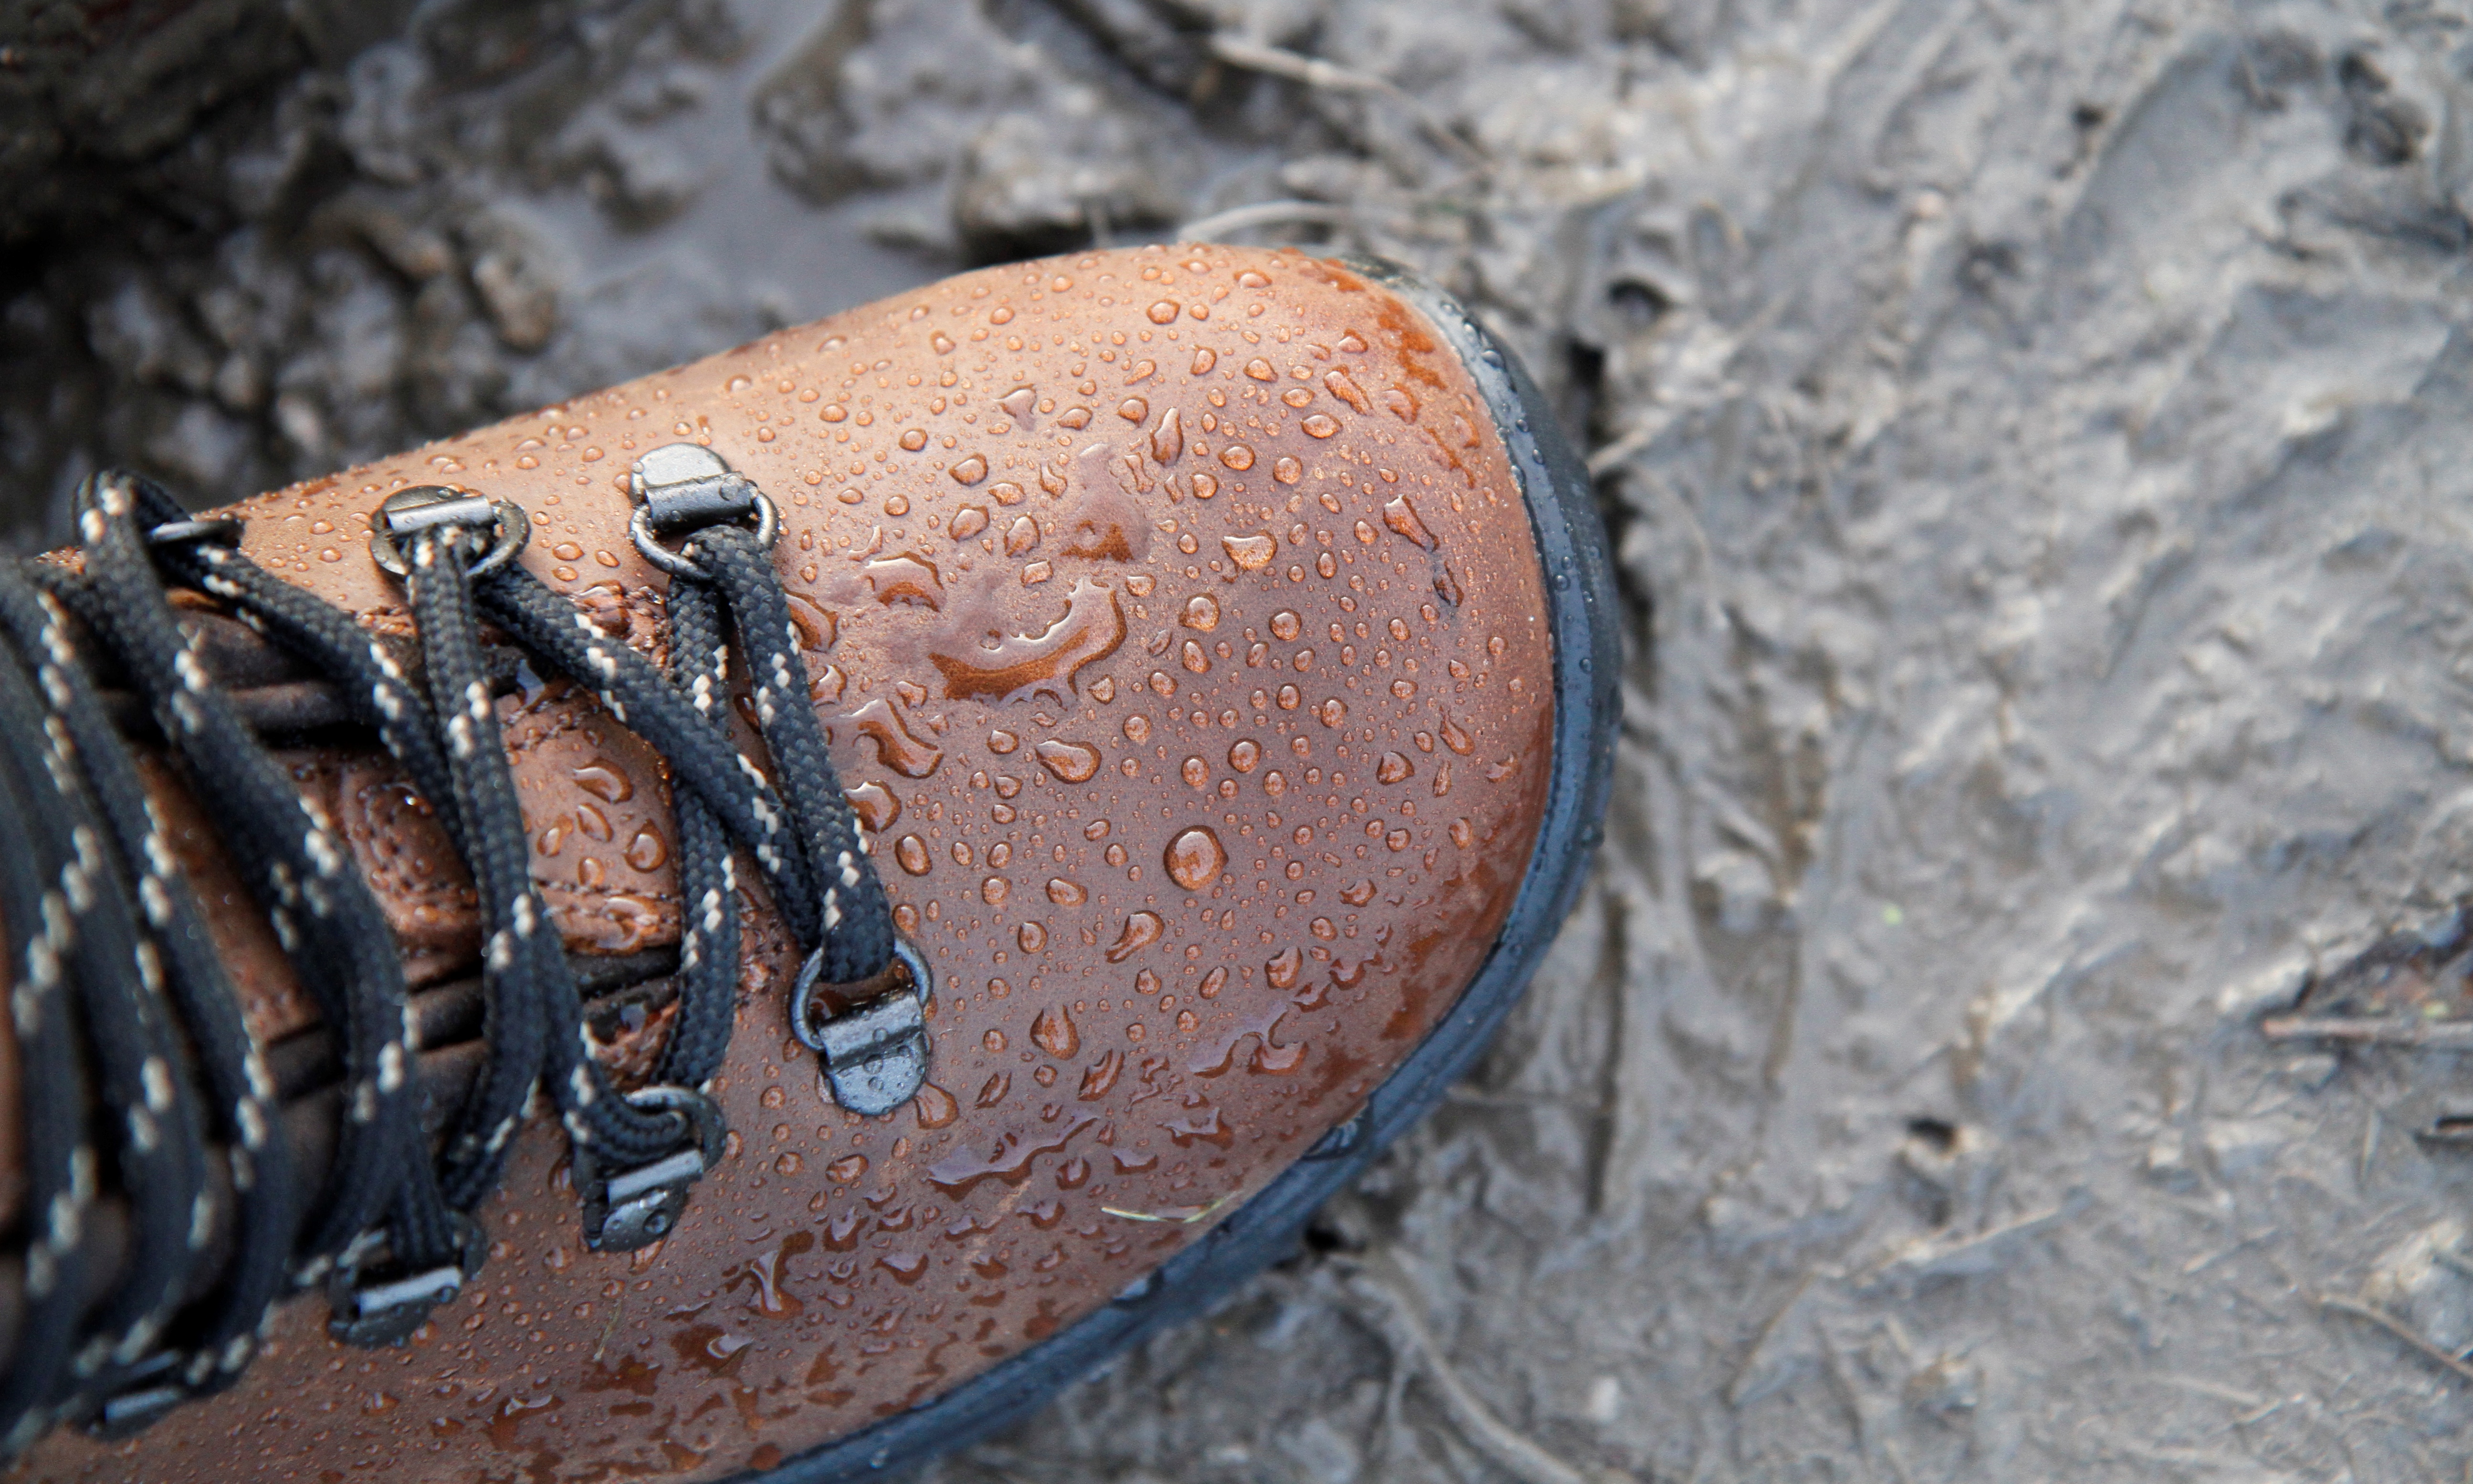 waterproof boot treatment